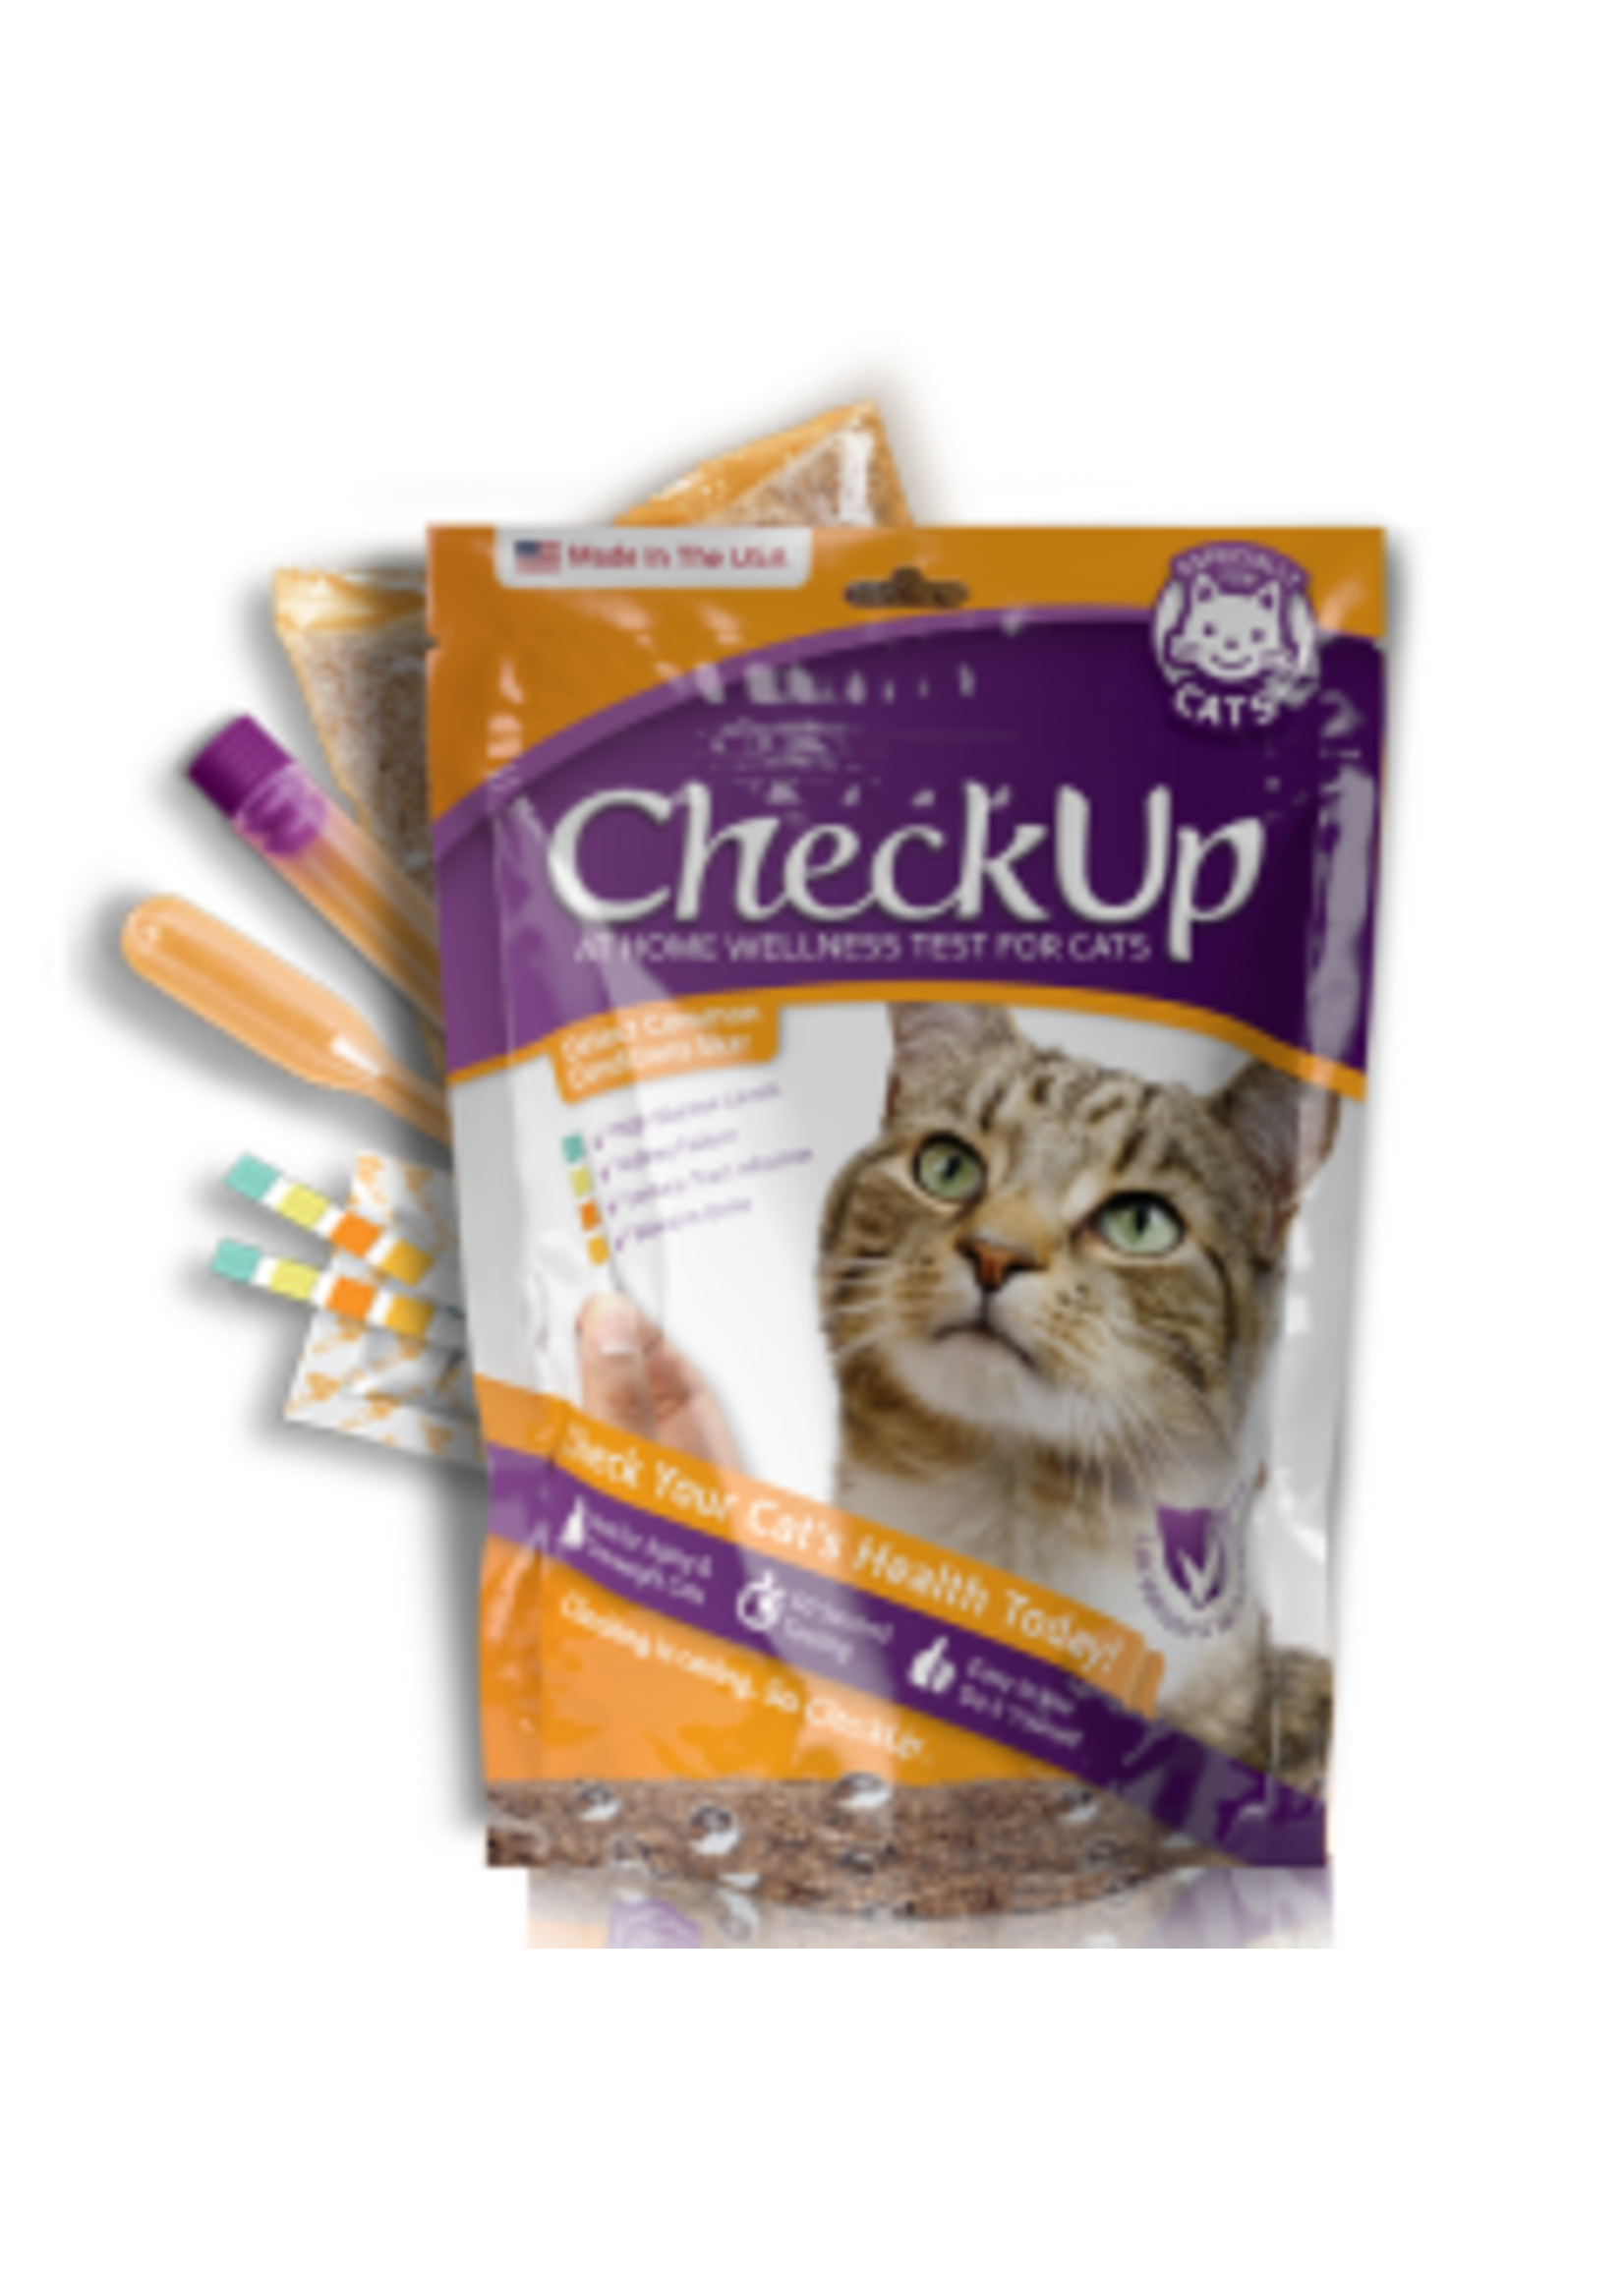 Check Up CheckUp - Cat Wellness Test